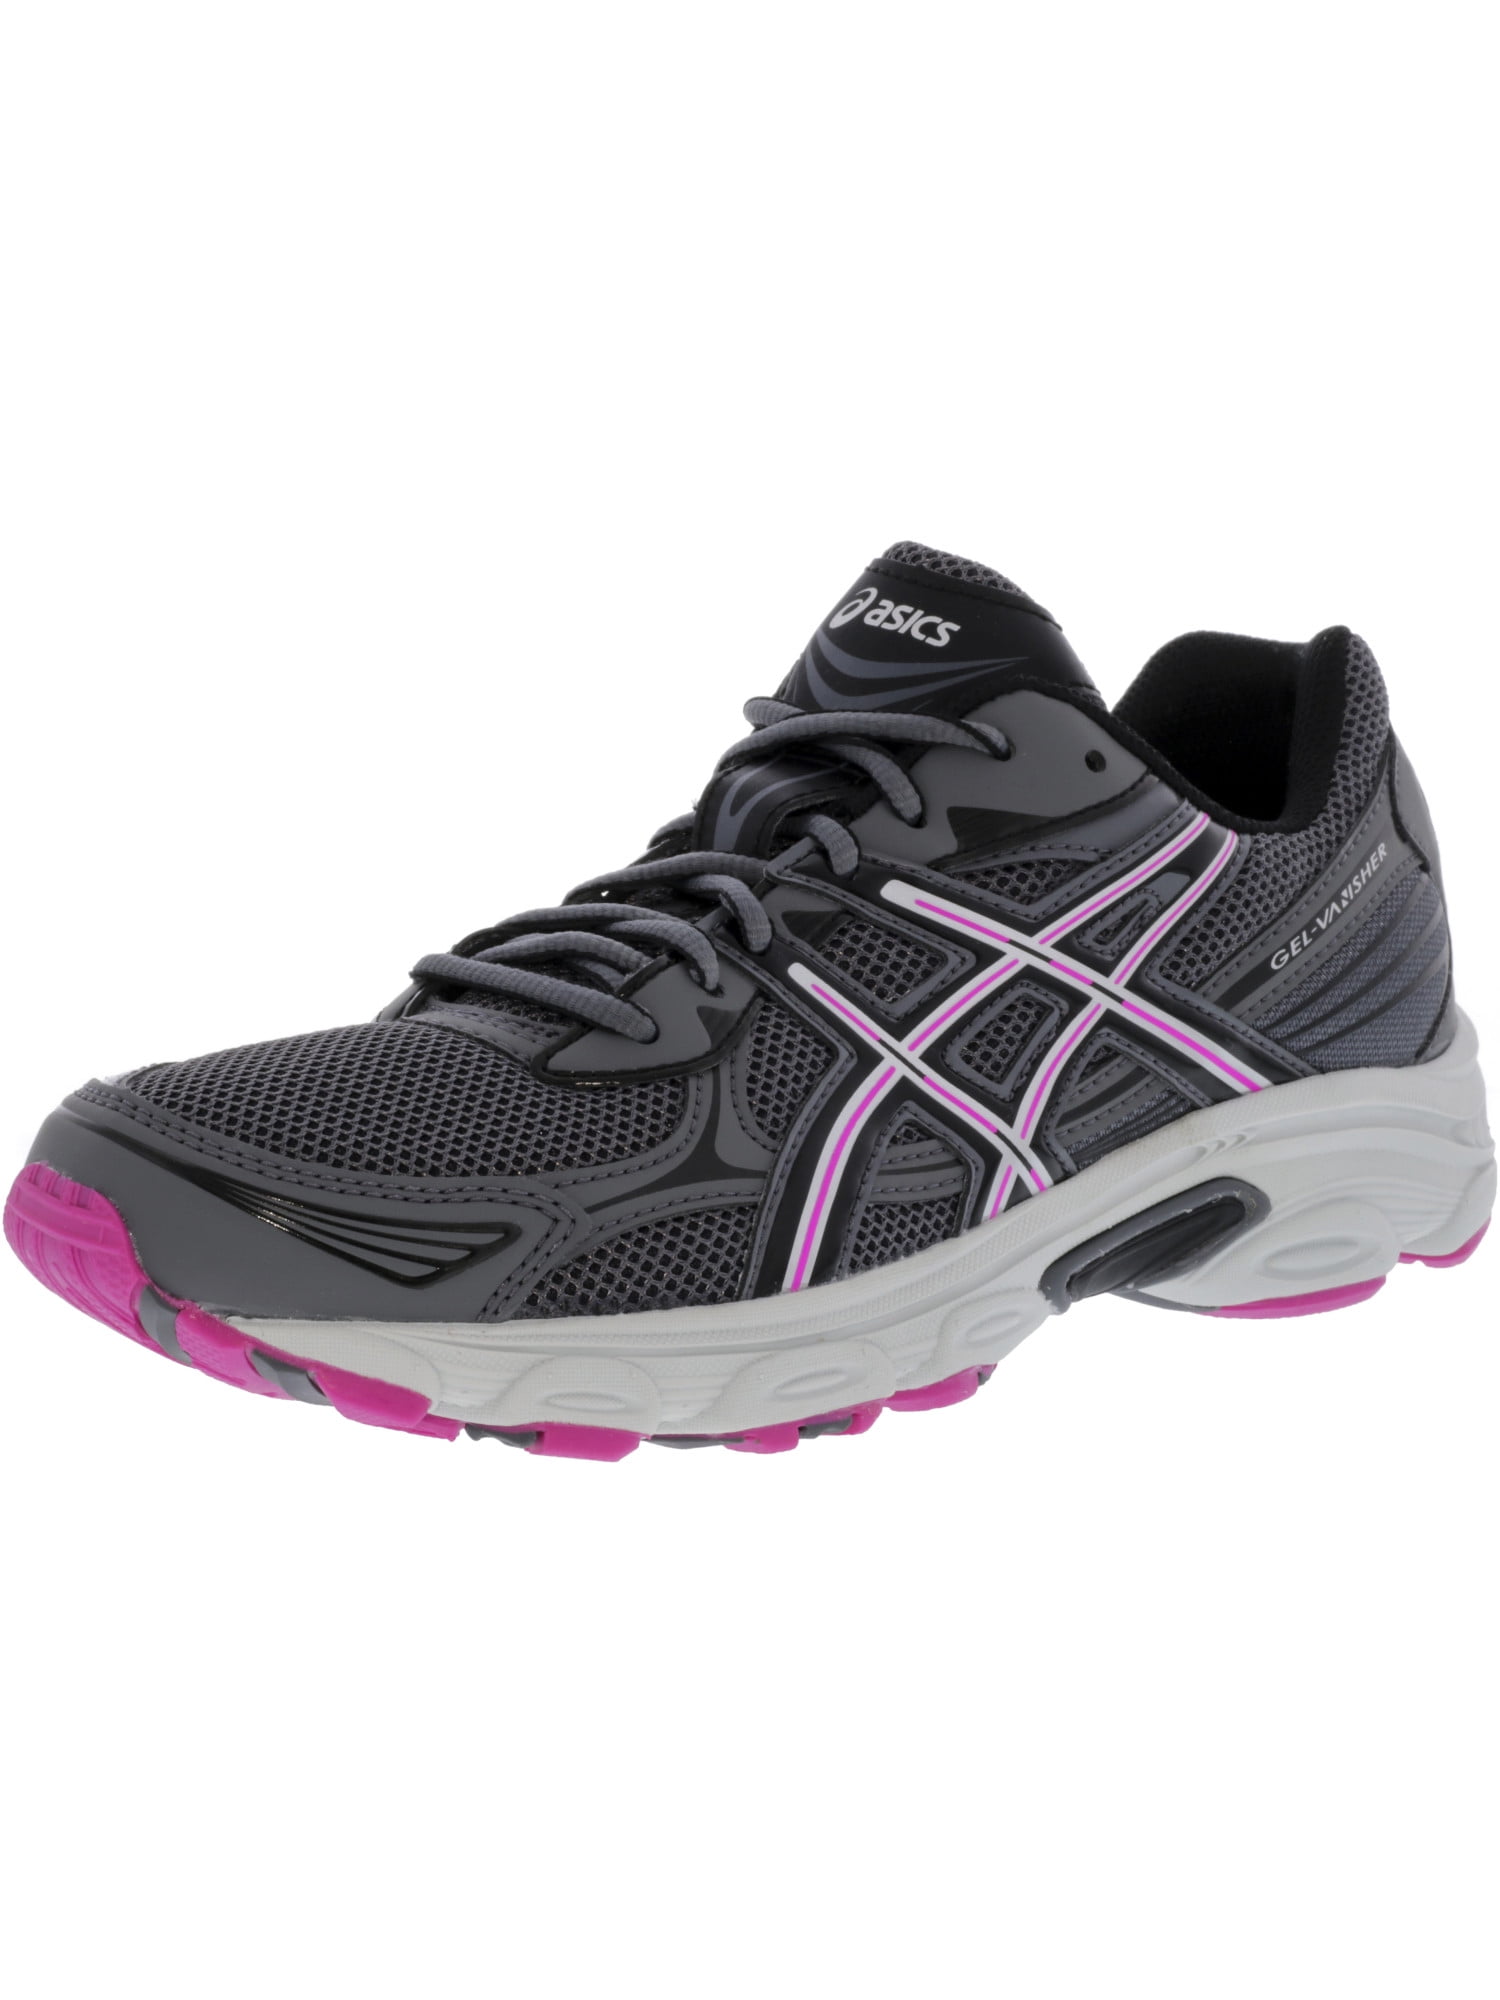 Asics Women's Gel-Vanisher Carbon / Black Pink Glow Ankle-High Running ...